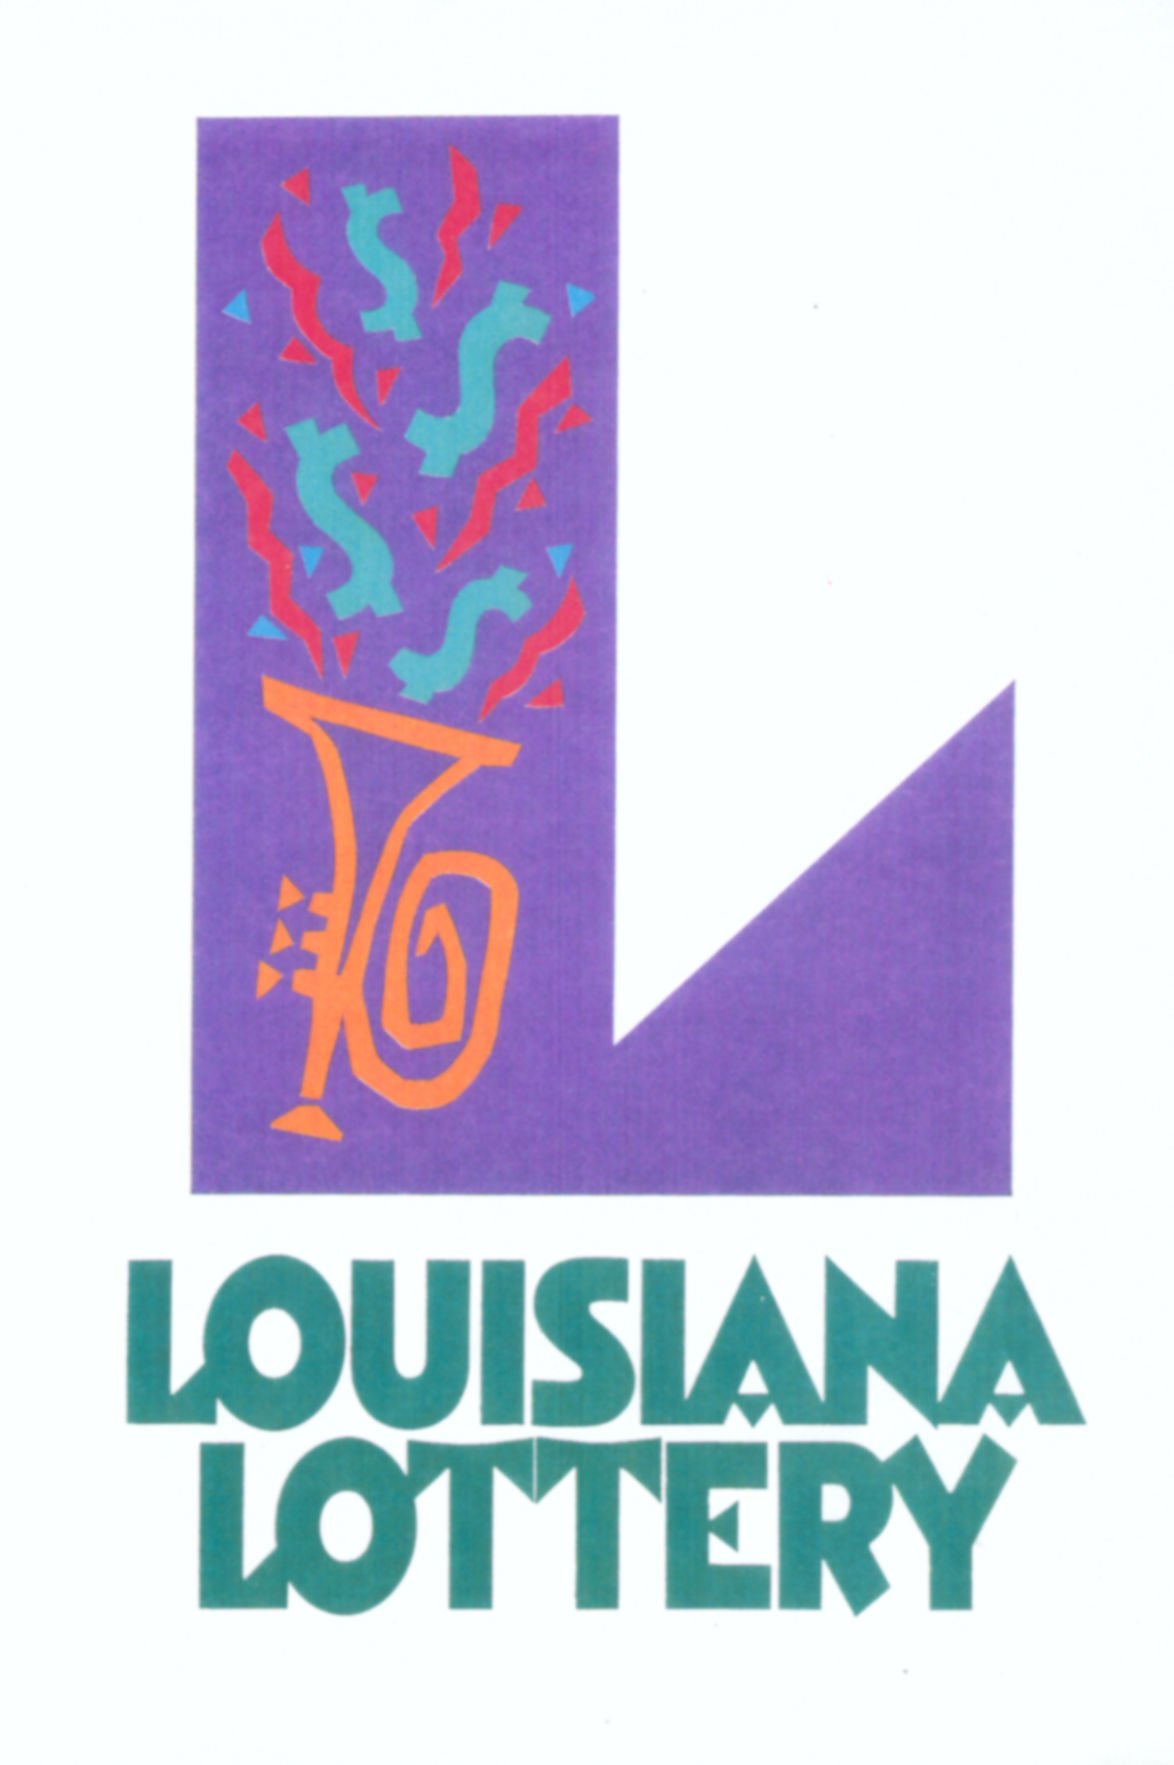 Louisiana lottery baton rouge - wcy.wat.edu.pl